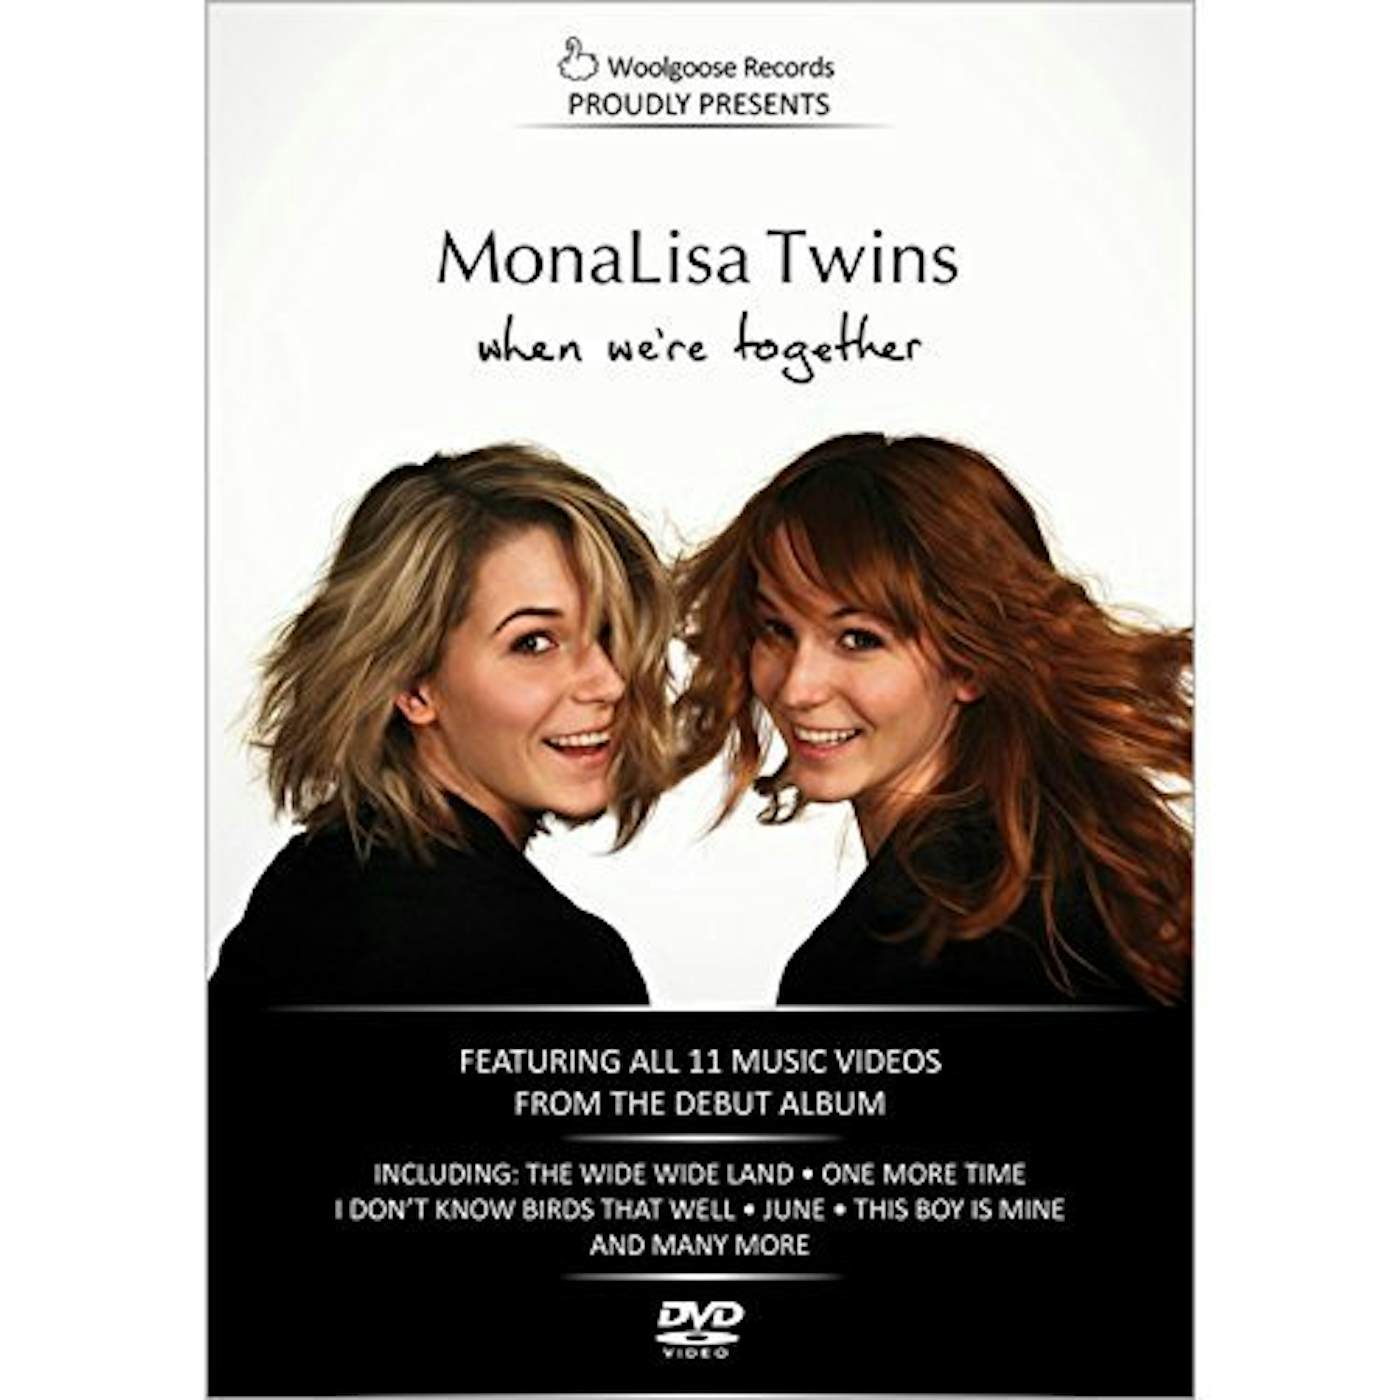 Monalisa Twins Store: Official Merch & Vinyl